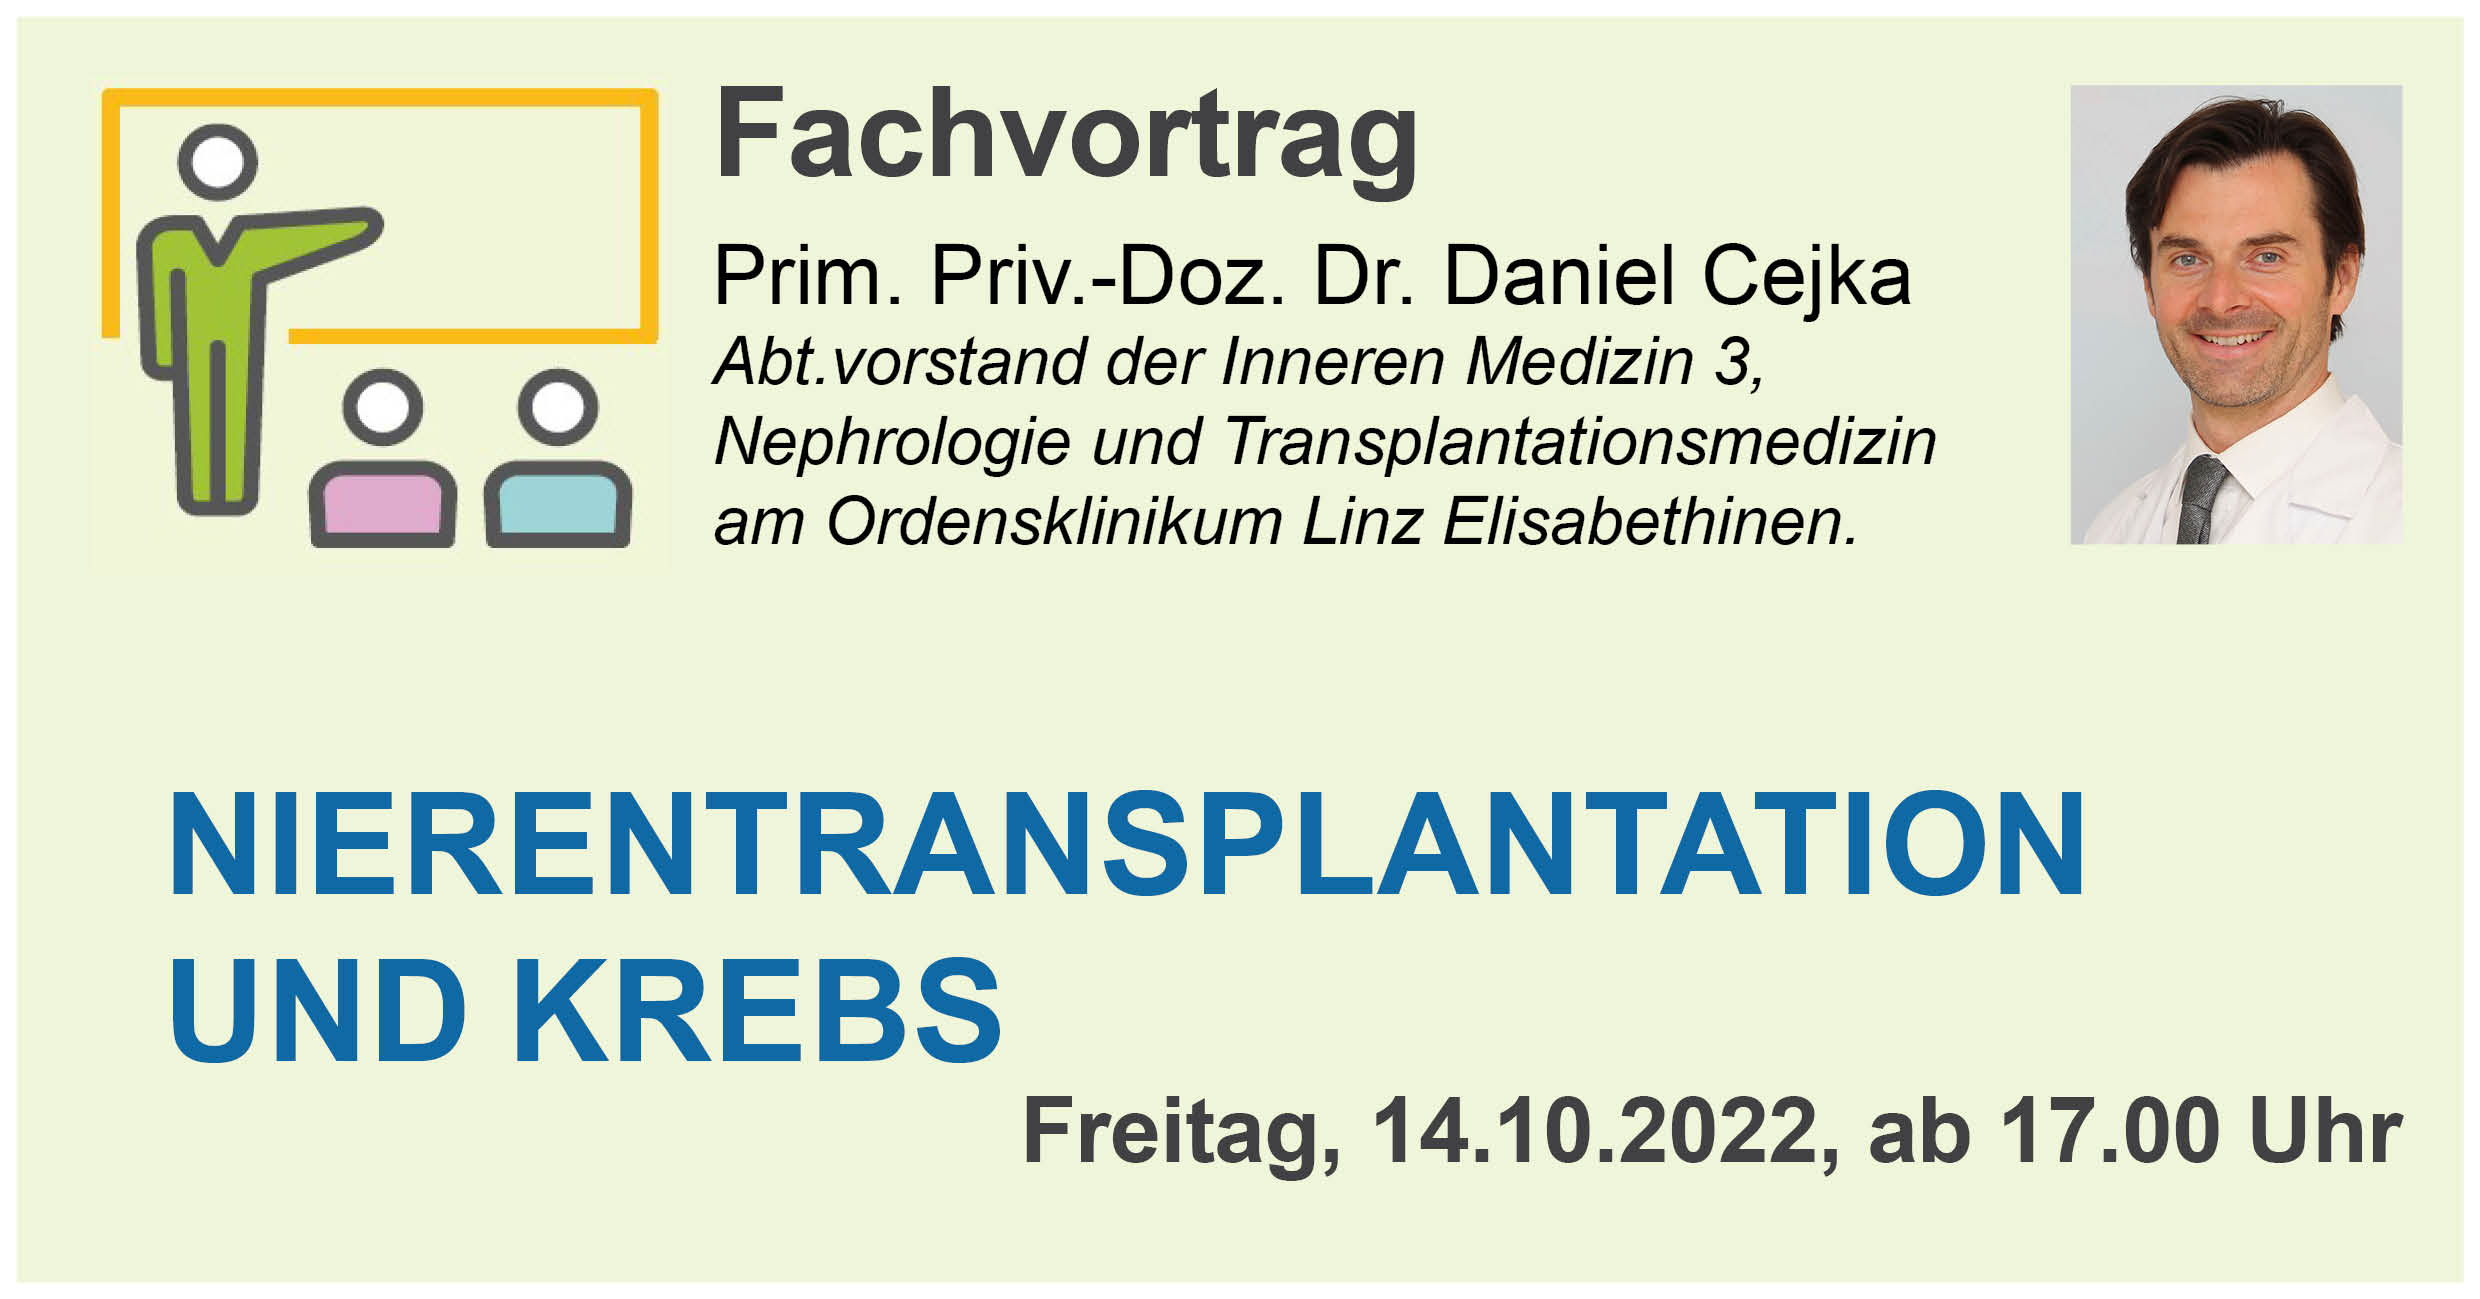 Online Fachvortrag „Nierentransplantation & Krebs" mit Prim. Priv.-Doz. Dr. Daniel Cejka